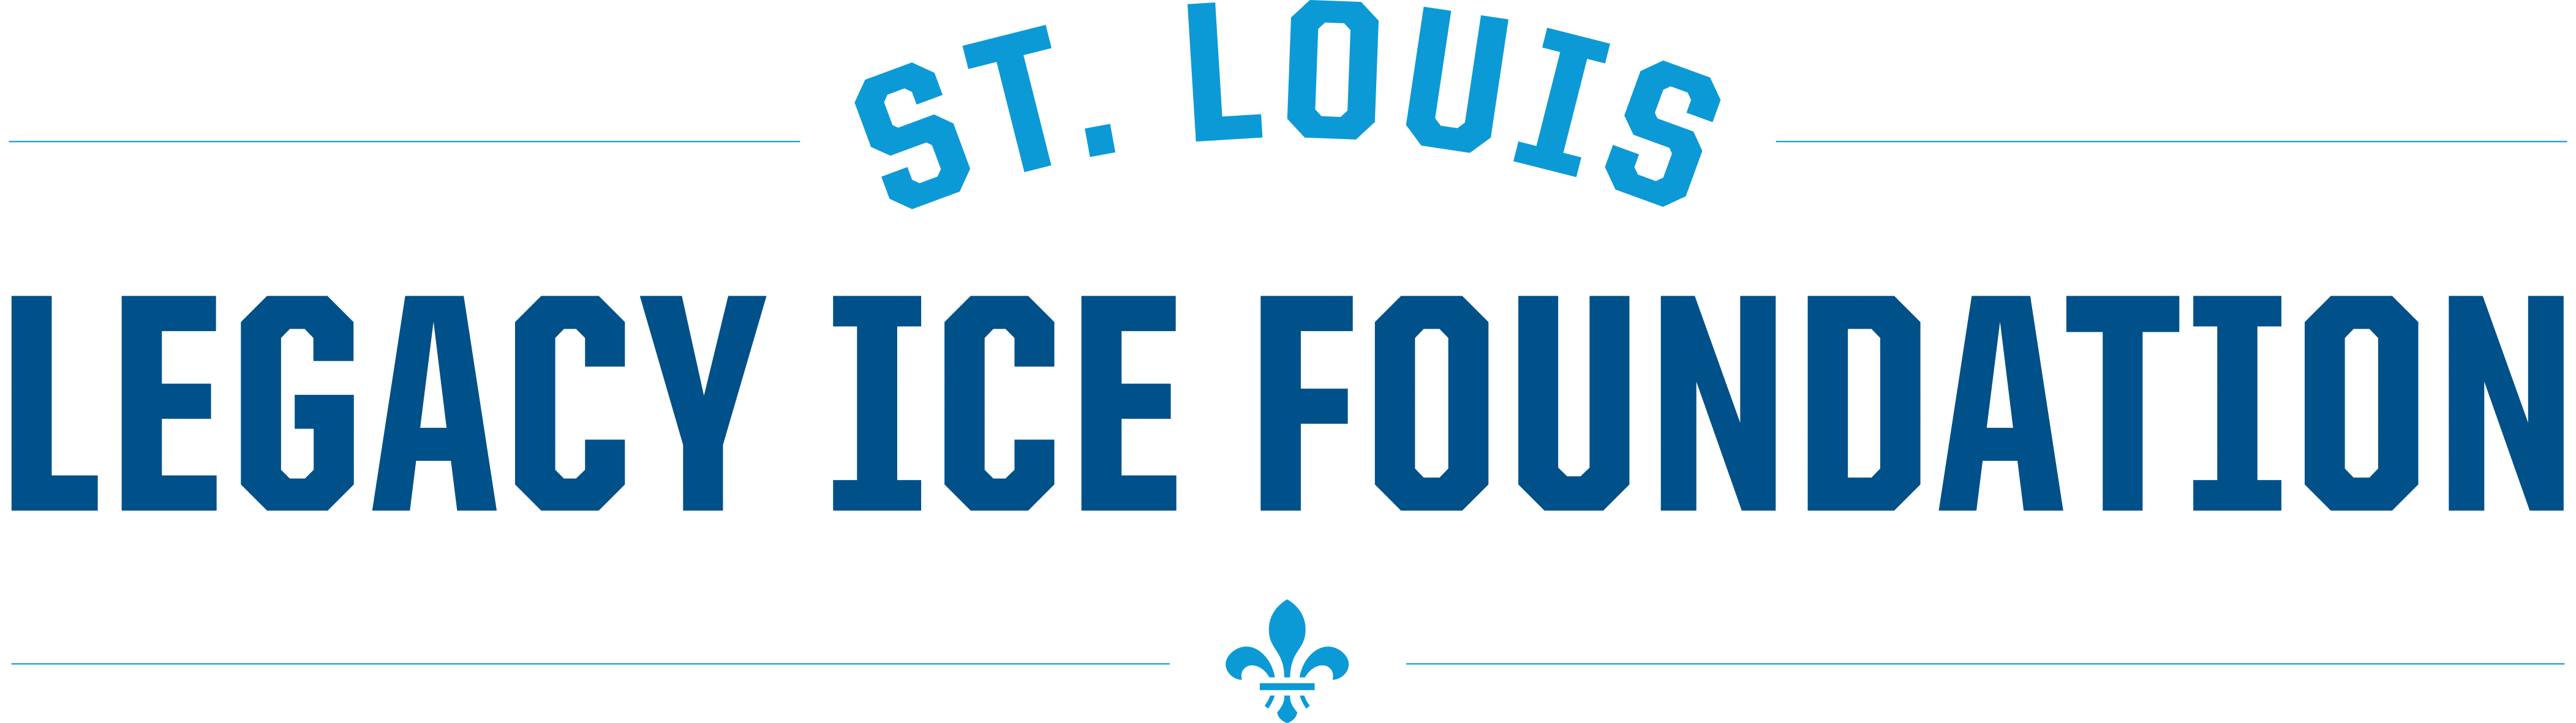 St. Louis Legacy Ice Foundation logo